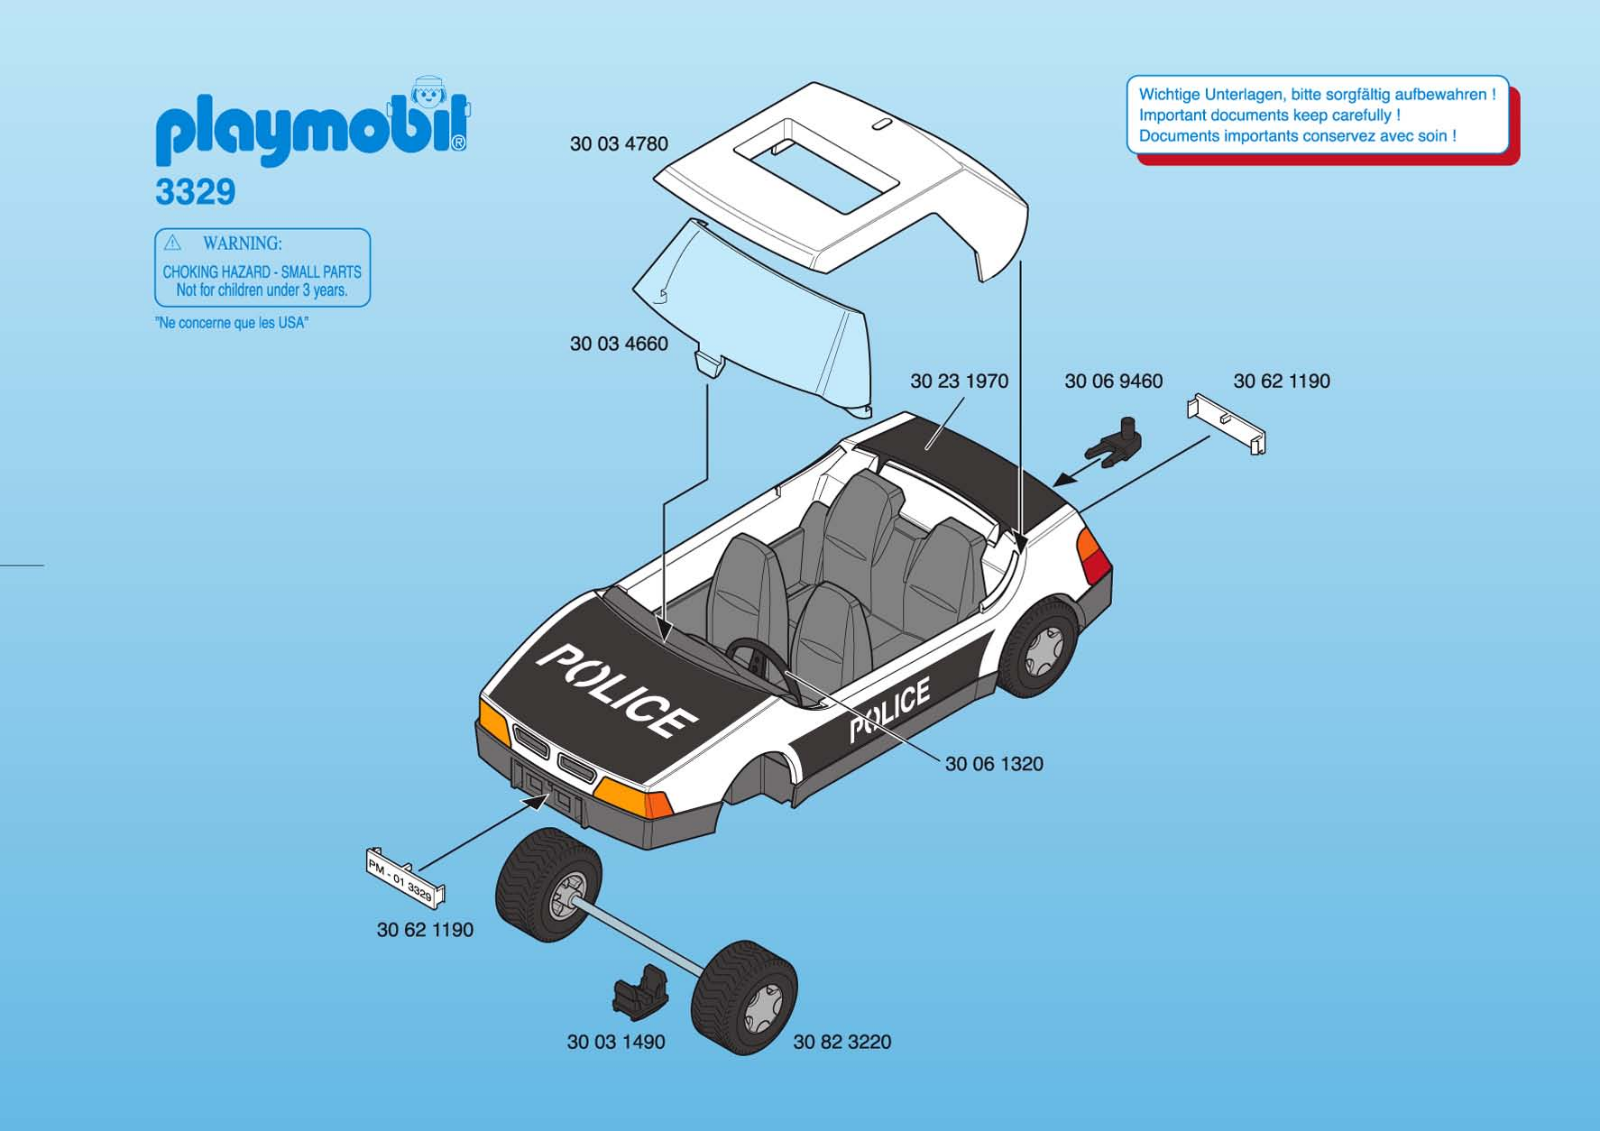 Playmobil 3329 Instructions